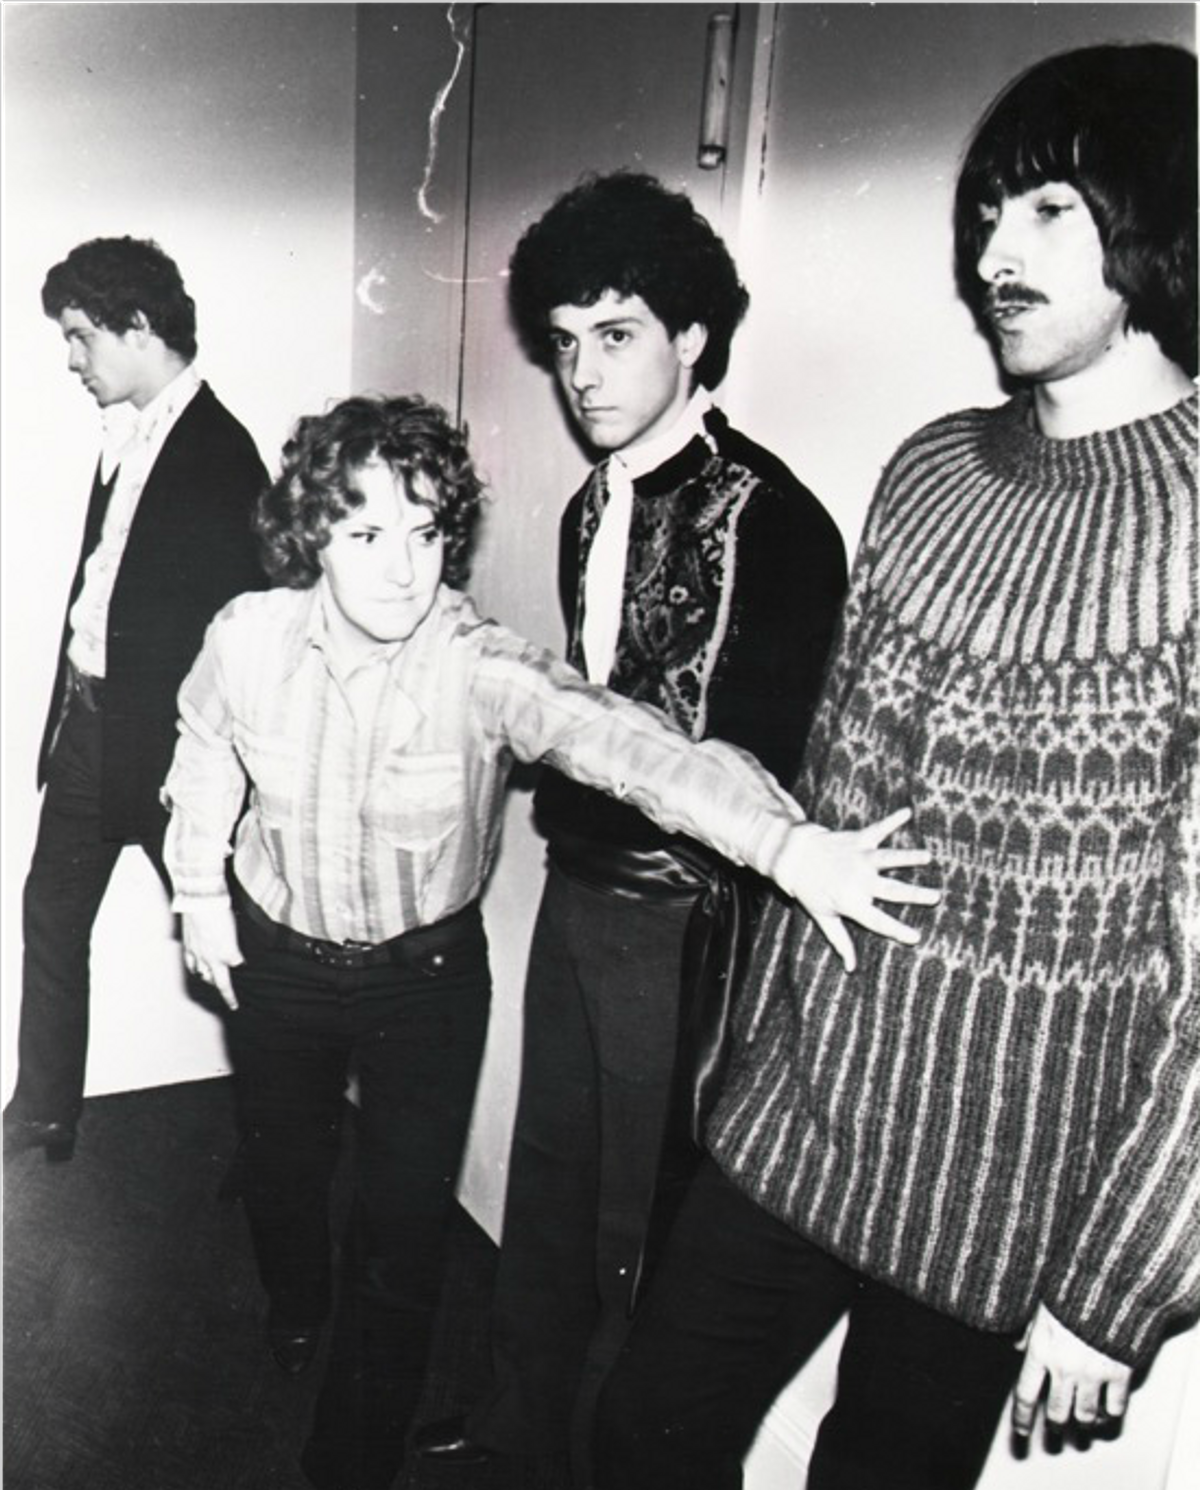 The Velvet Underground in 1968. (Wikimedia)